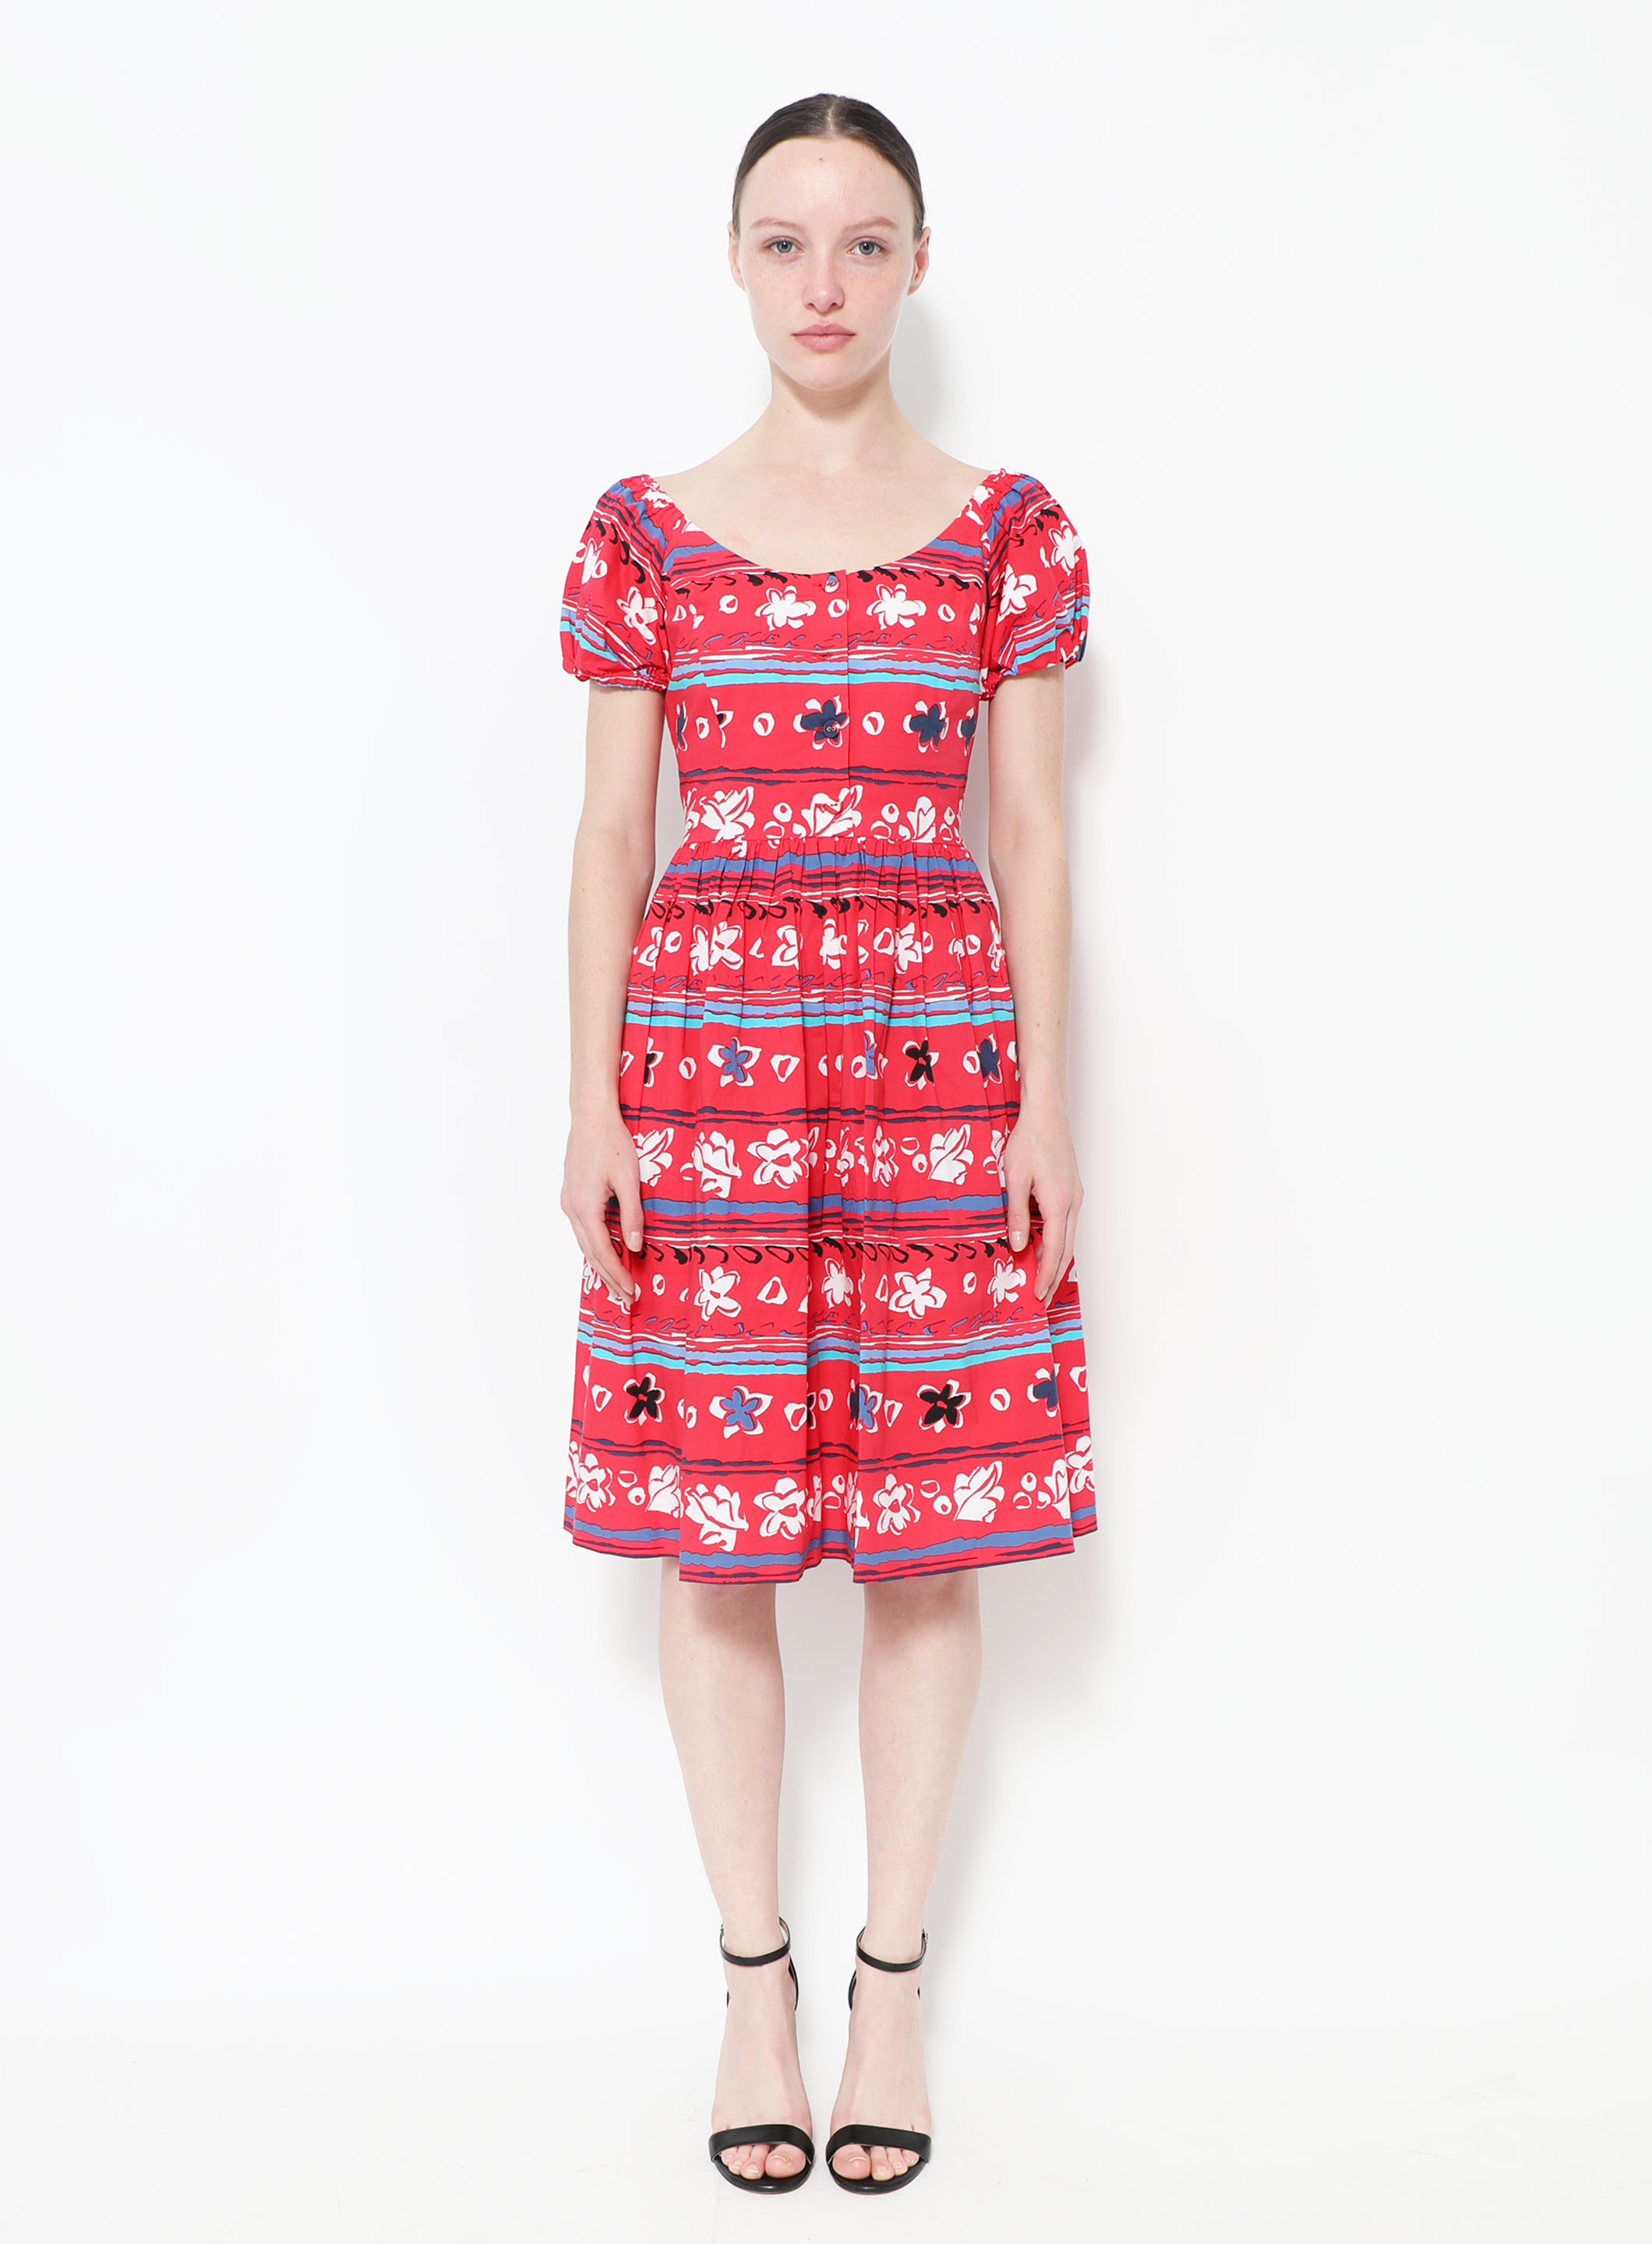 Louis Vuitton - Authenticated Dress - Cotton Multicolour for Women, Very Good Condition